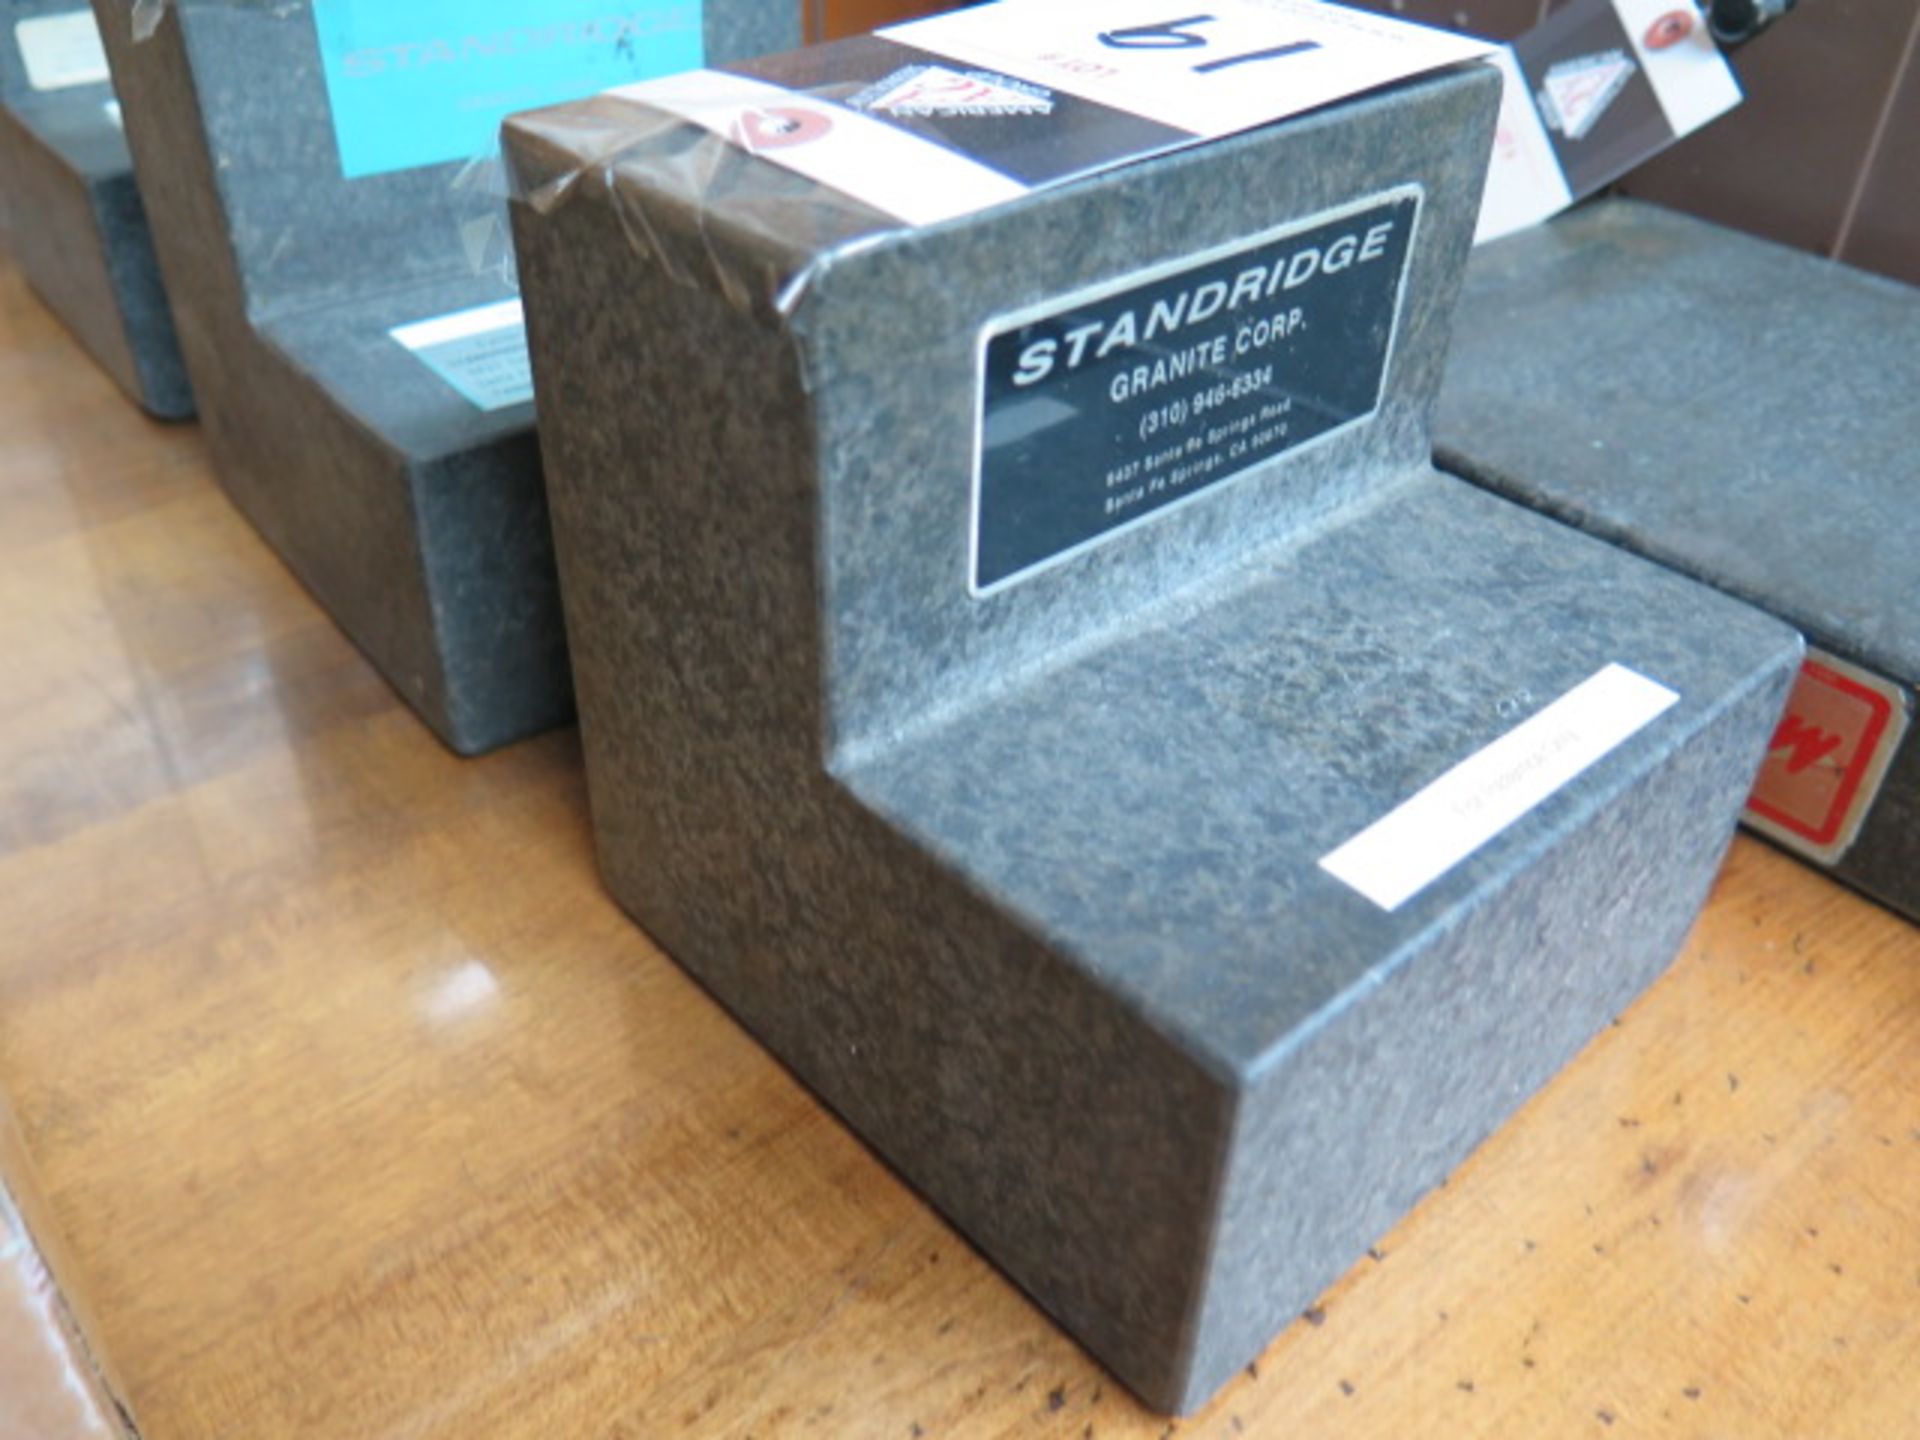 Standridge 6” x 6” x 6” Granite Angle Block (SOLD AS-IS - NO WARRANTY) - Image 2 of 4